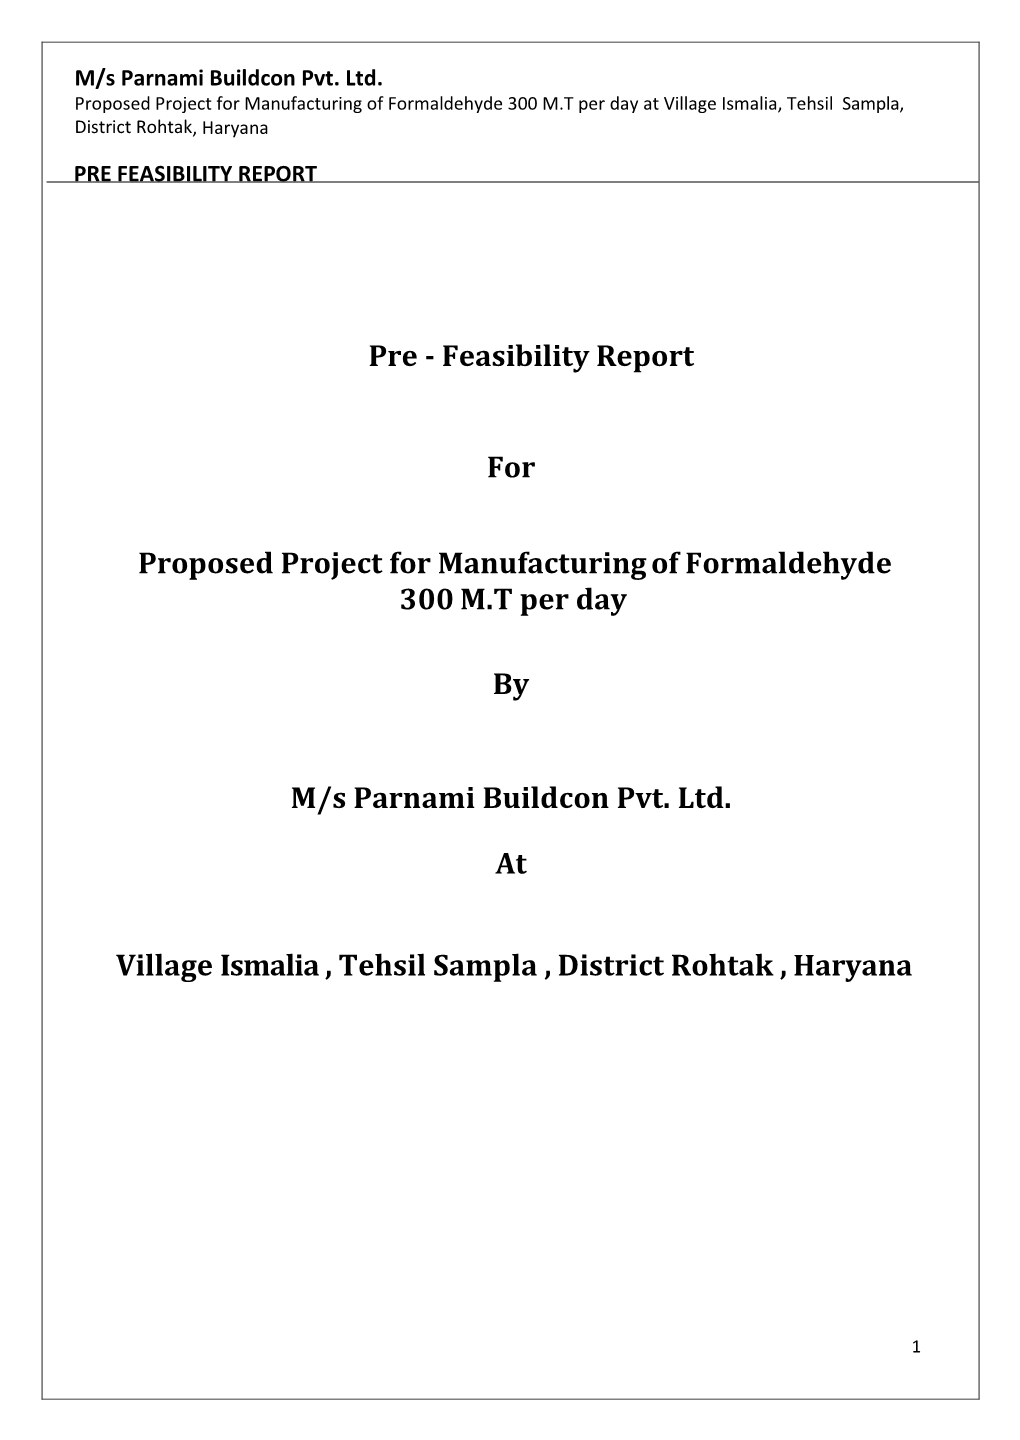 Pre Feasibility Report